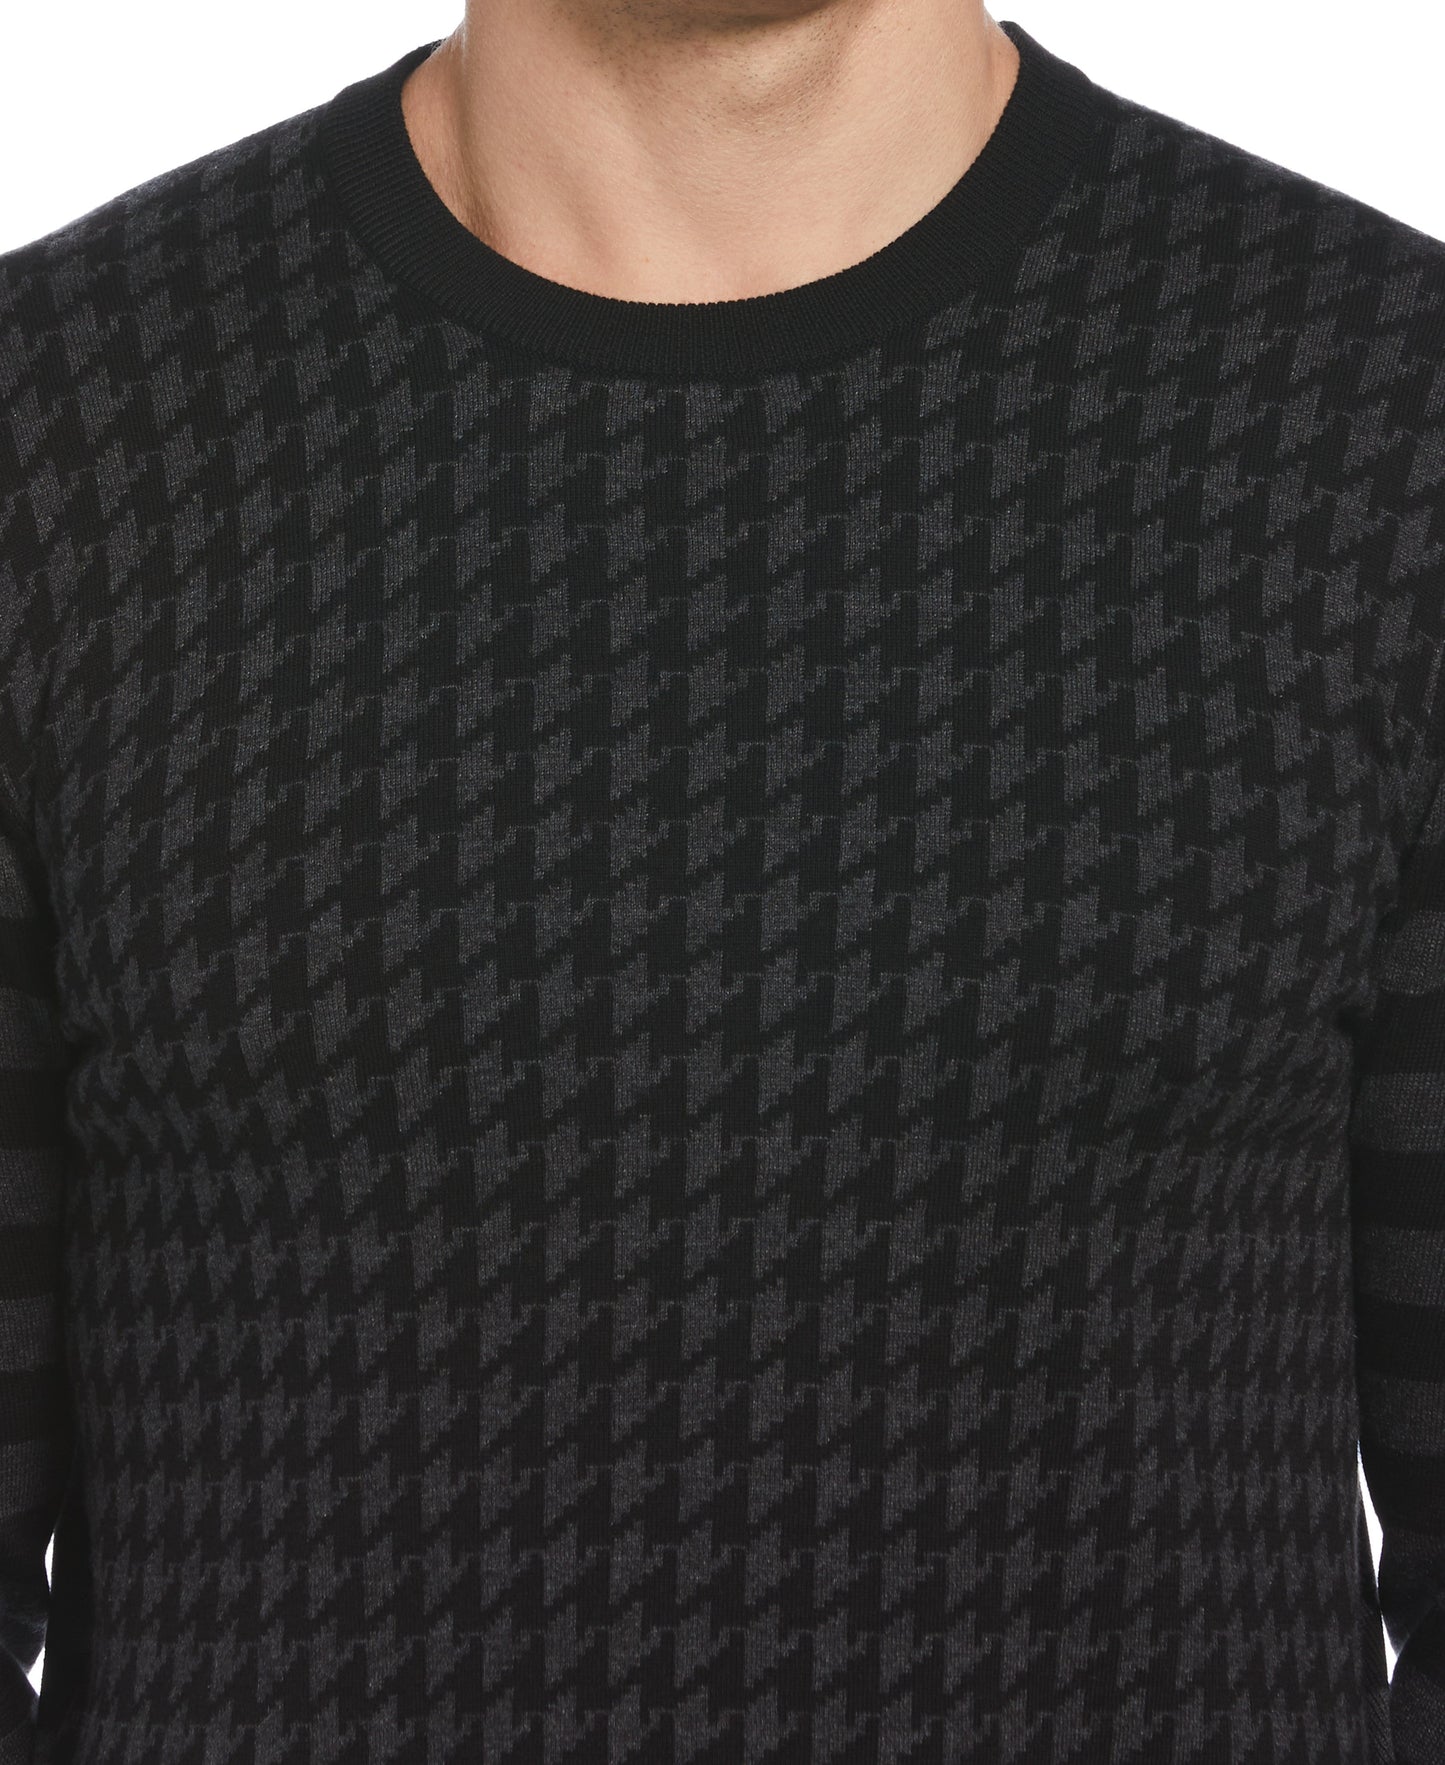 Mix Pattern Crew Neck Sweater